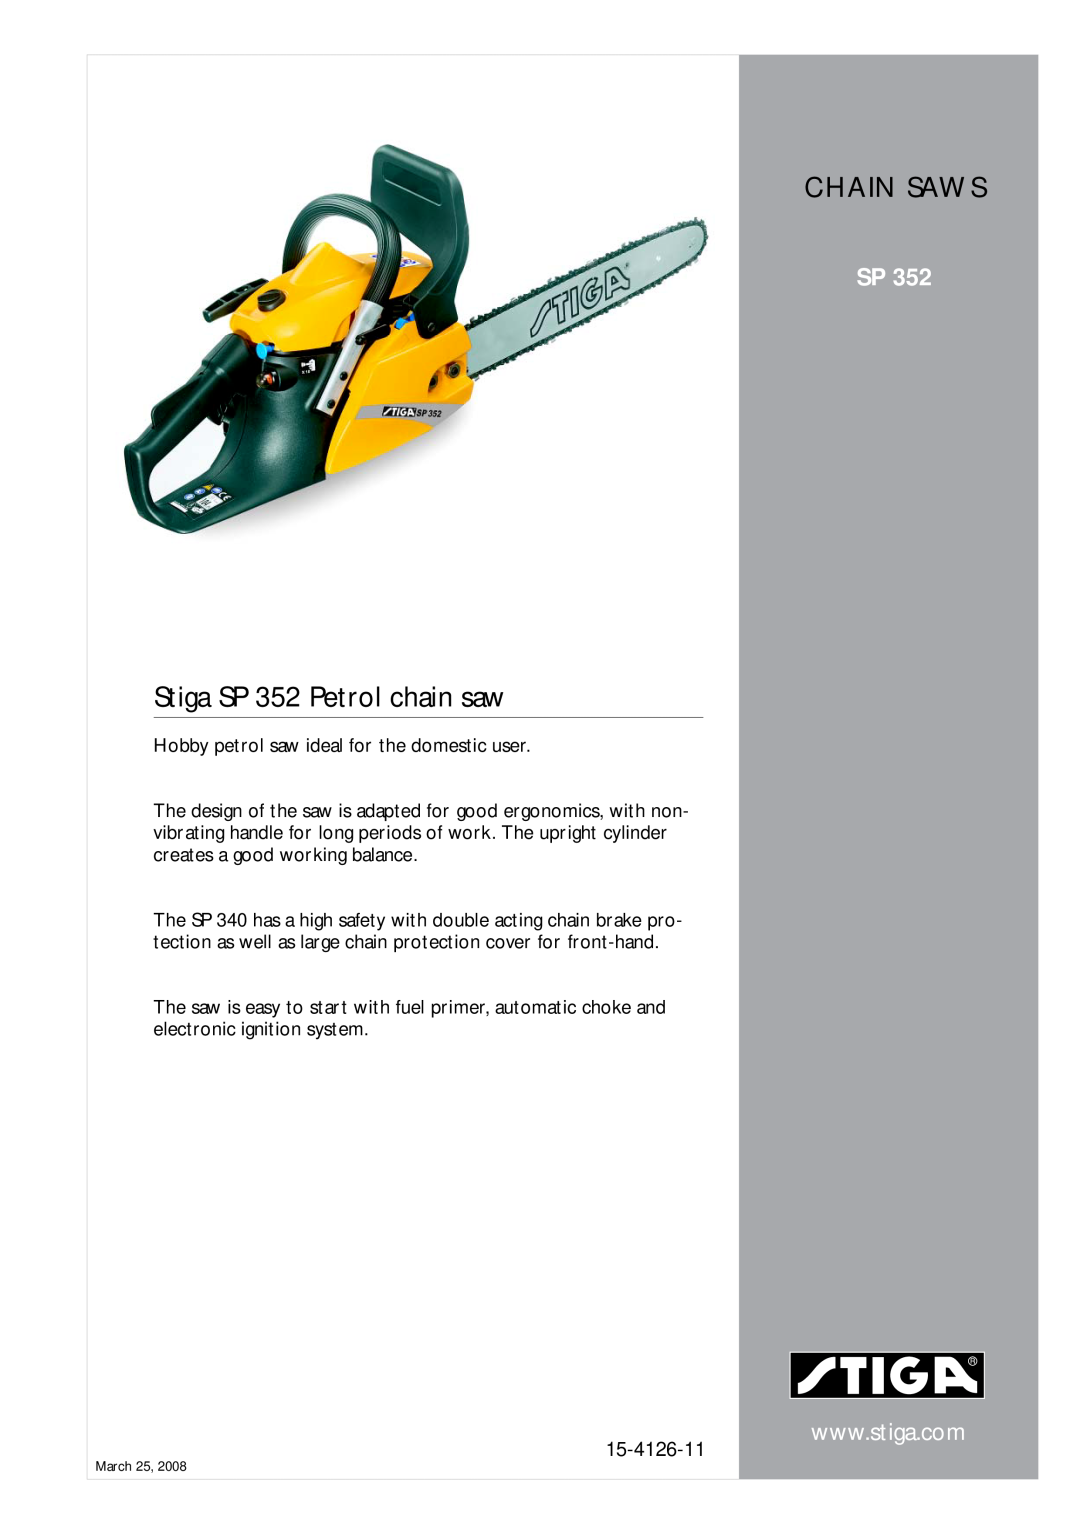 Stiga manual Stiga SP 352 Petrol chain saw, Chain Saws, 15-4126-11 